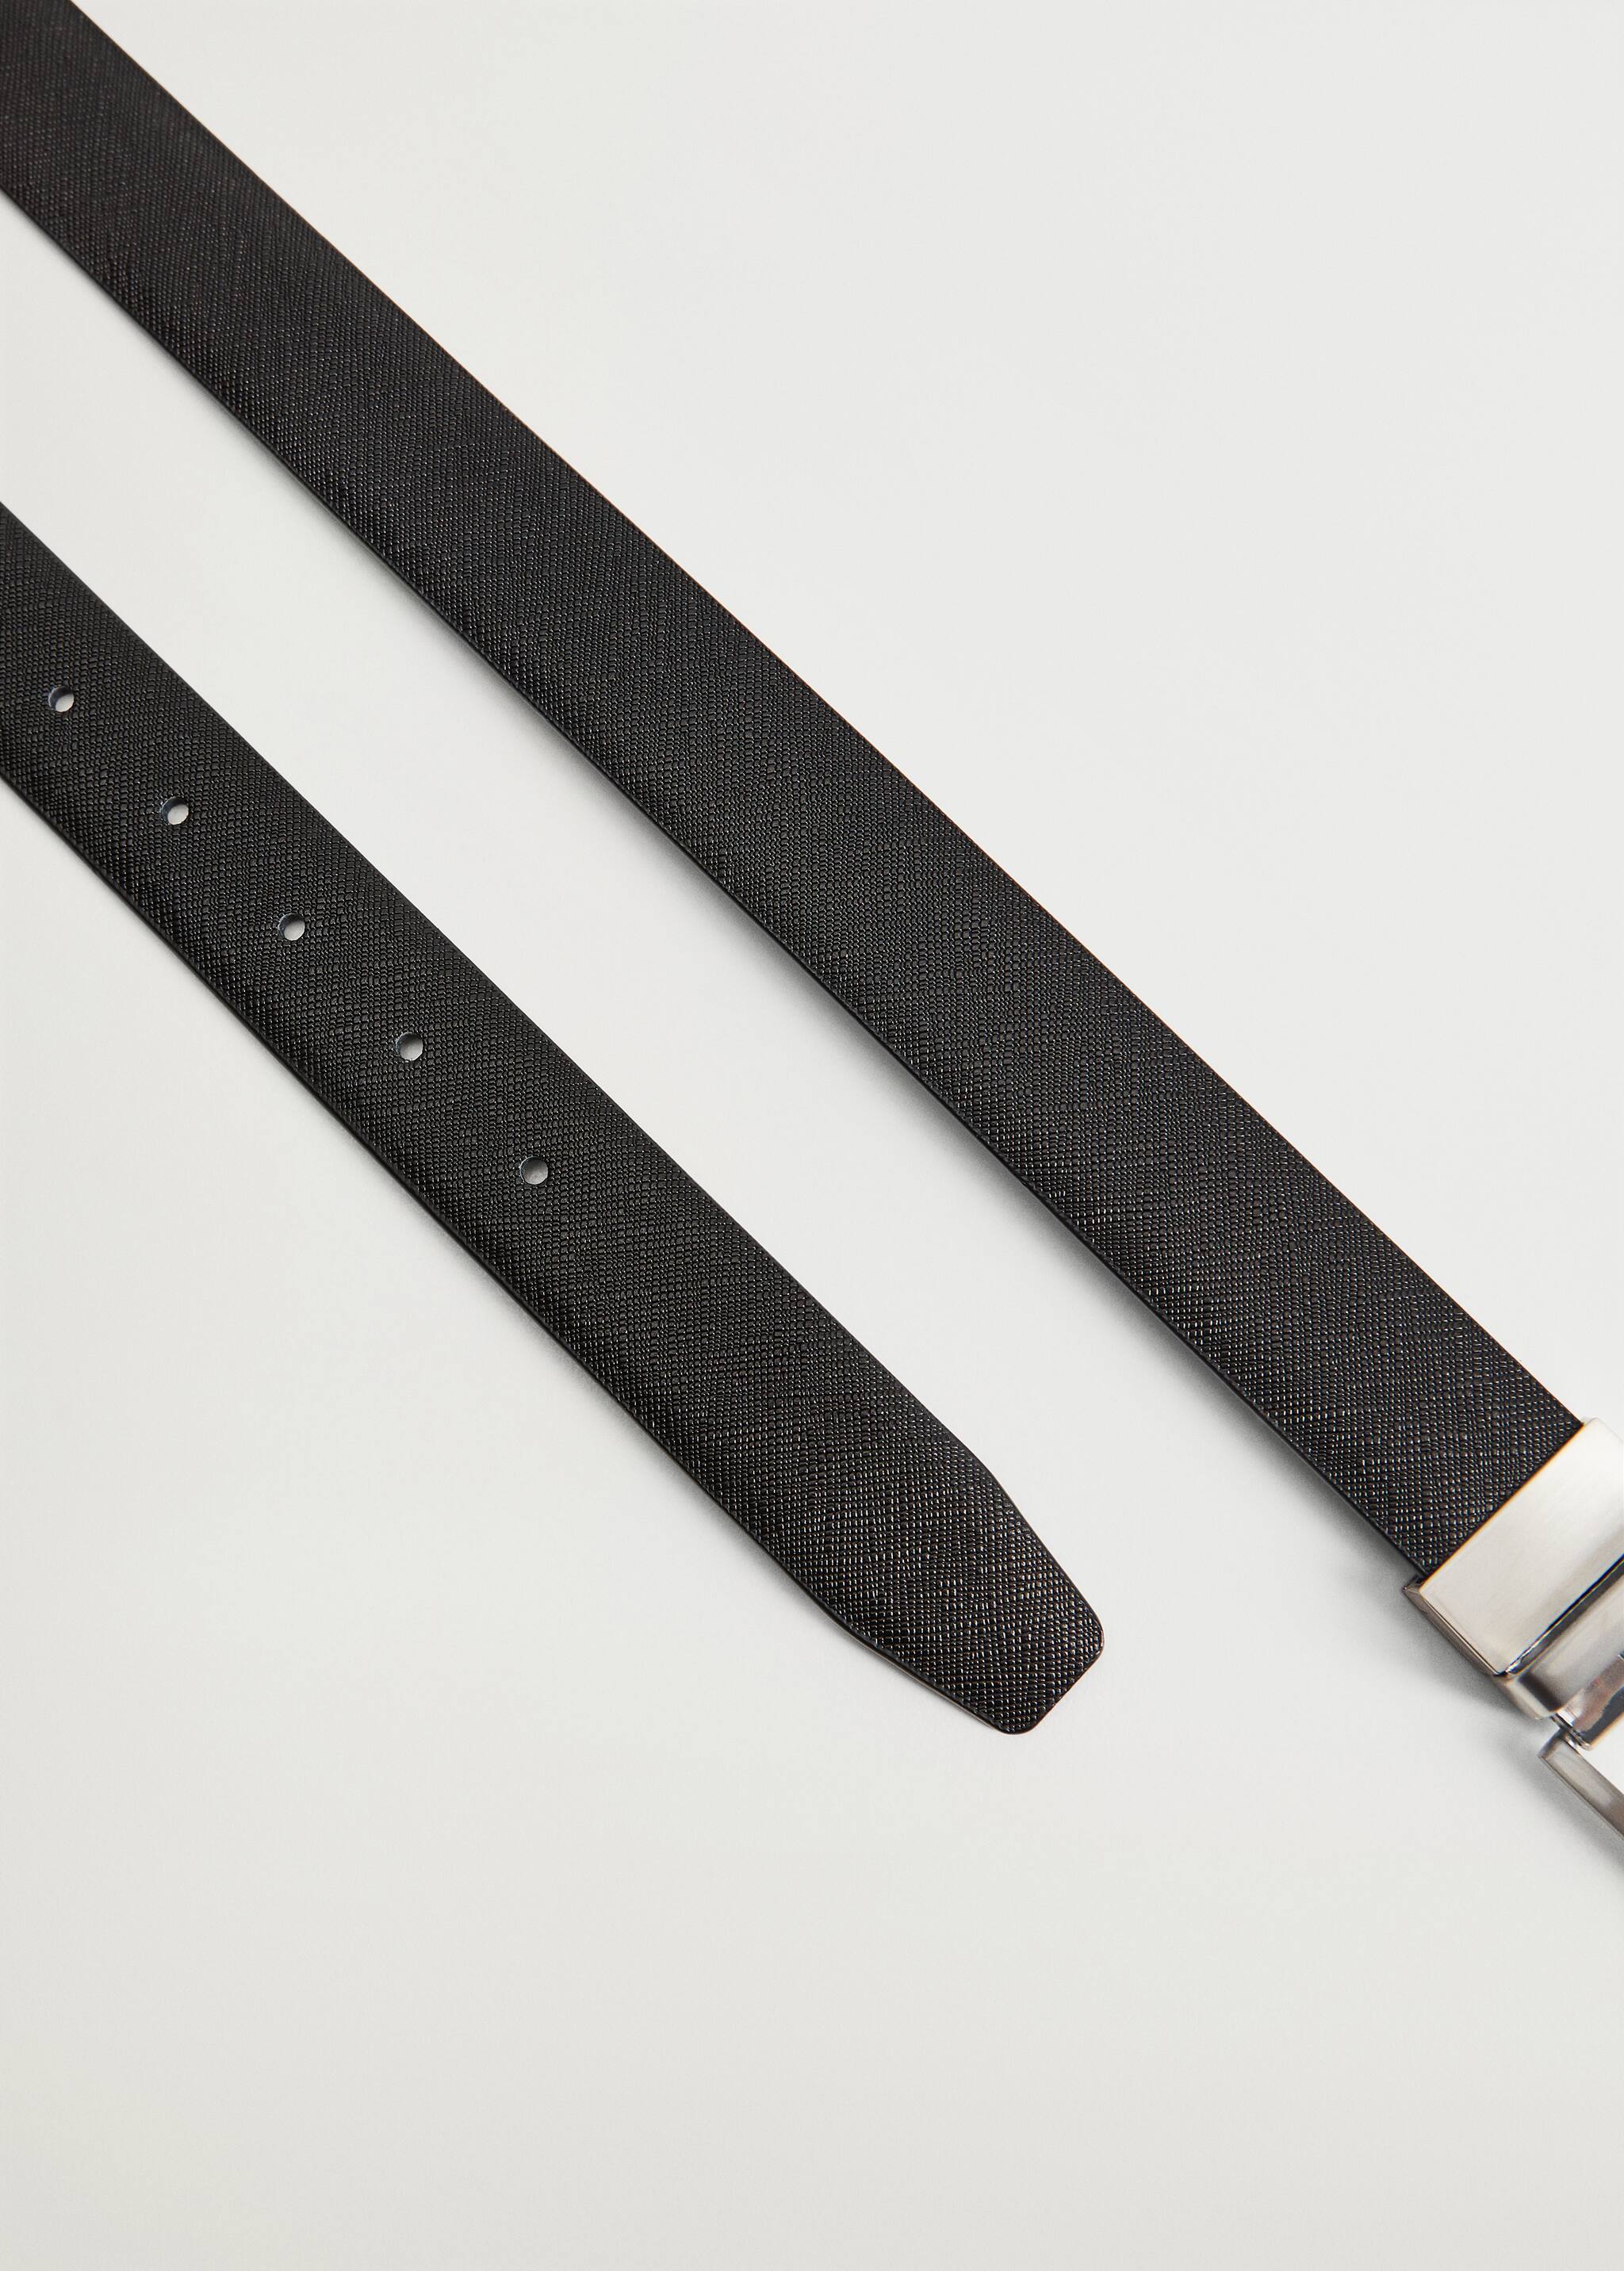 Saffiano leather tailored belt - Medium plane